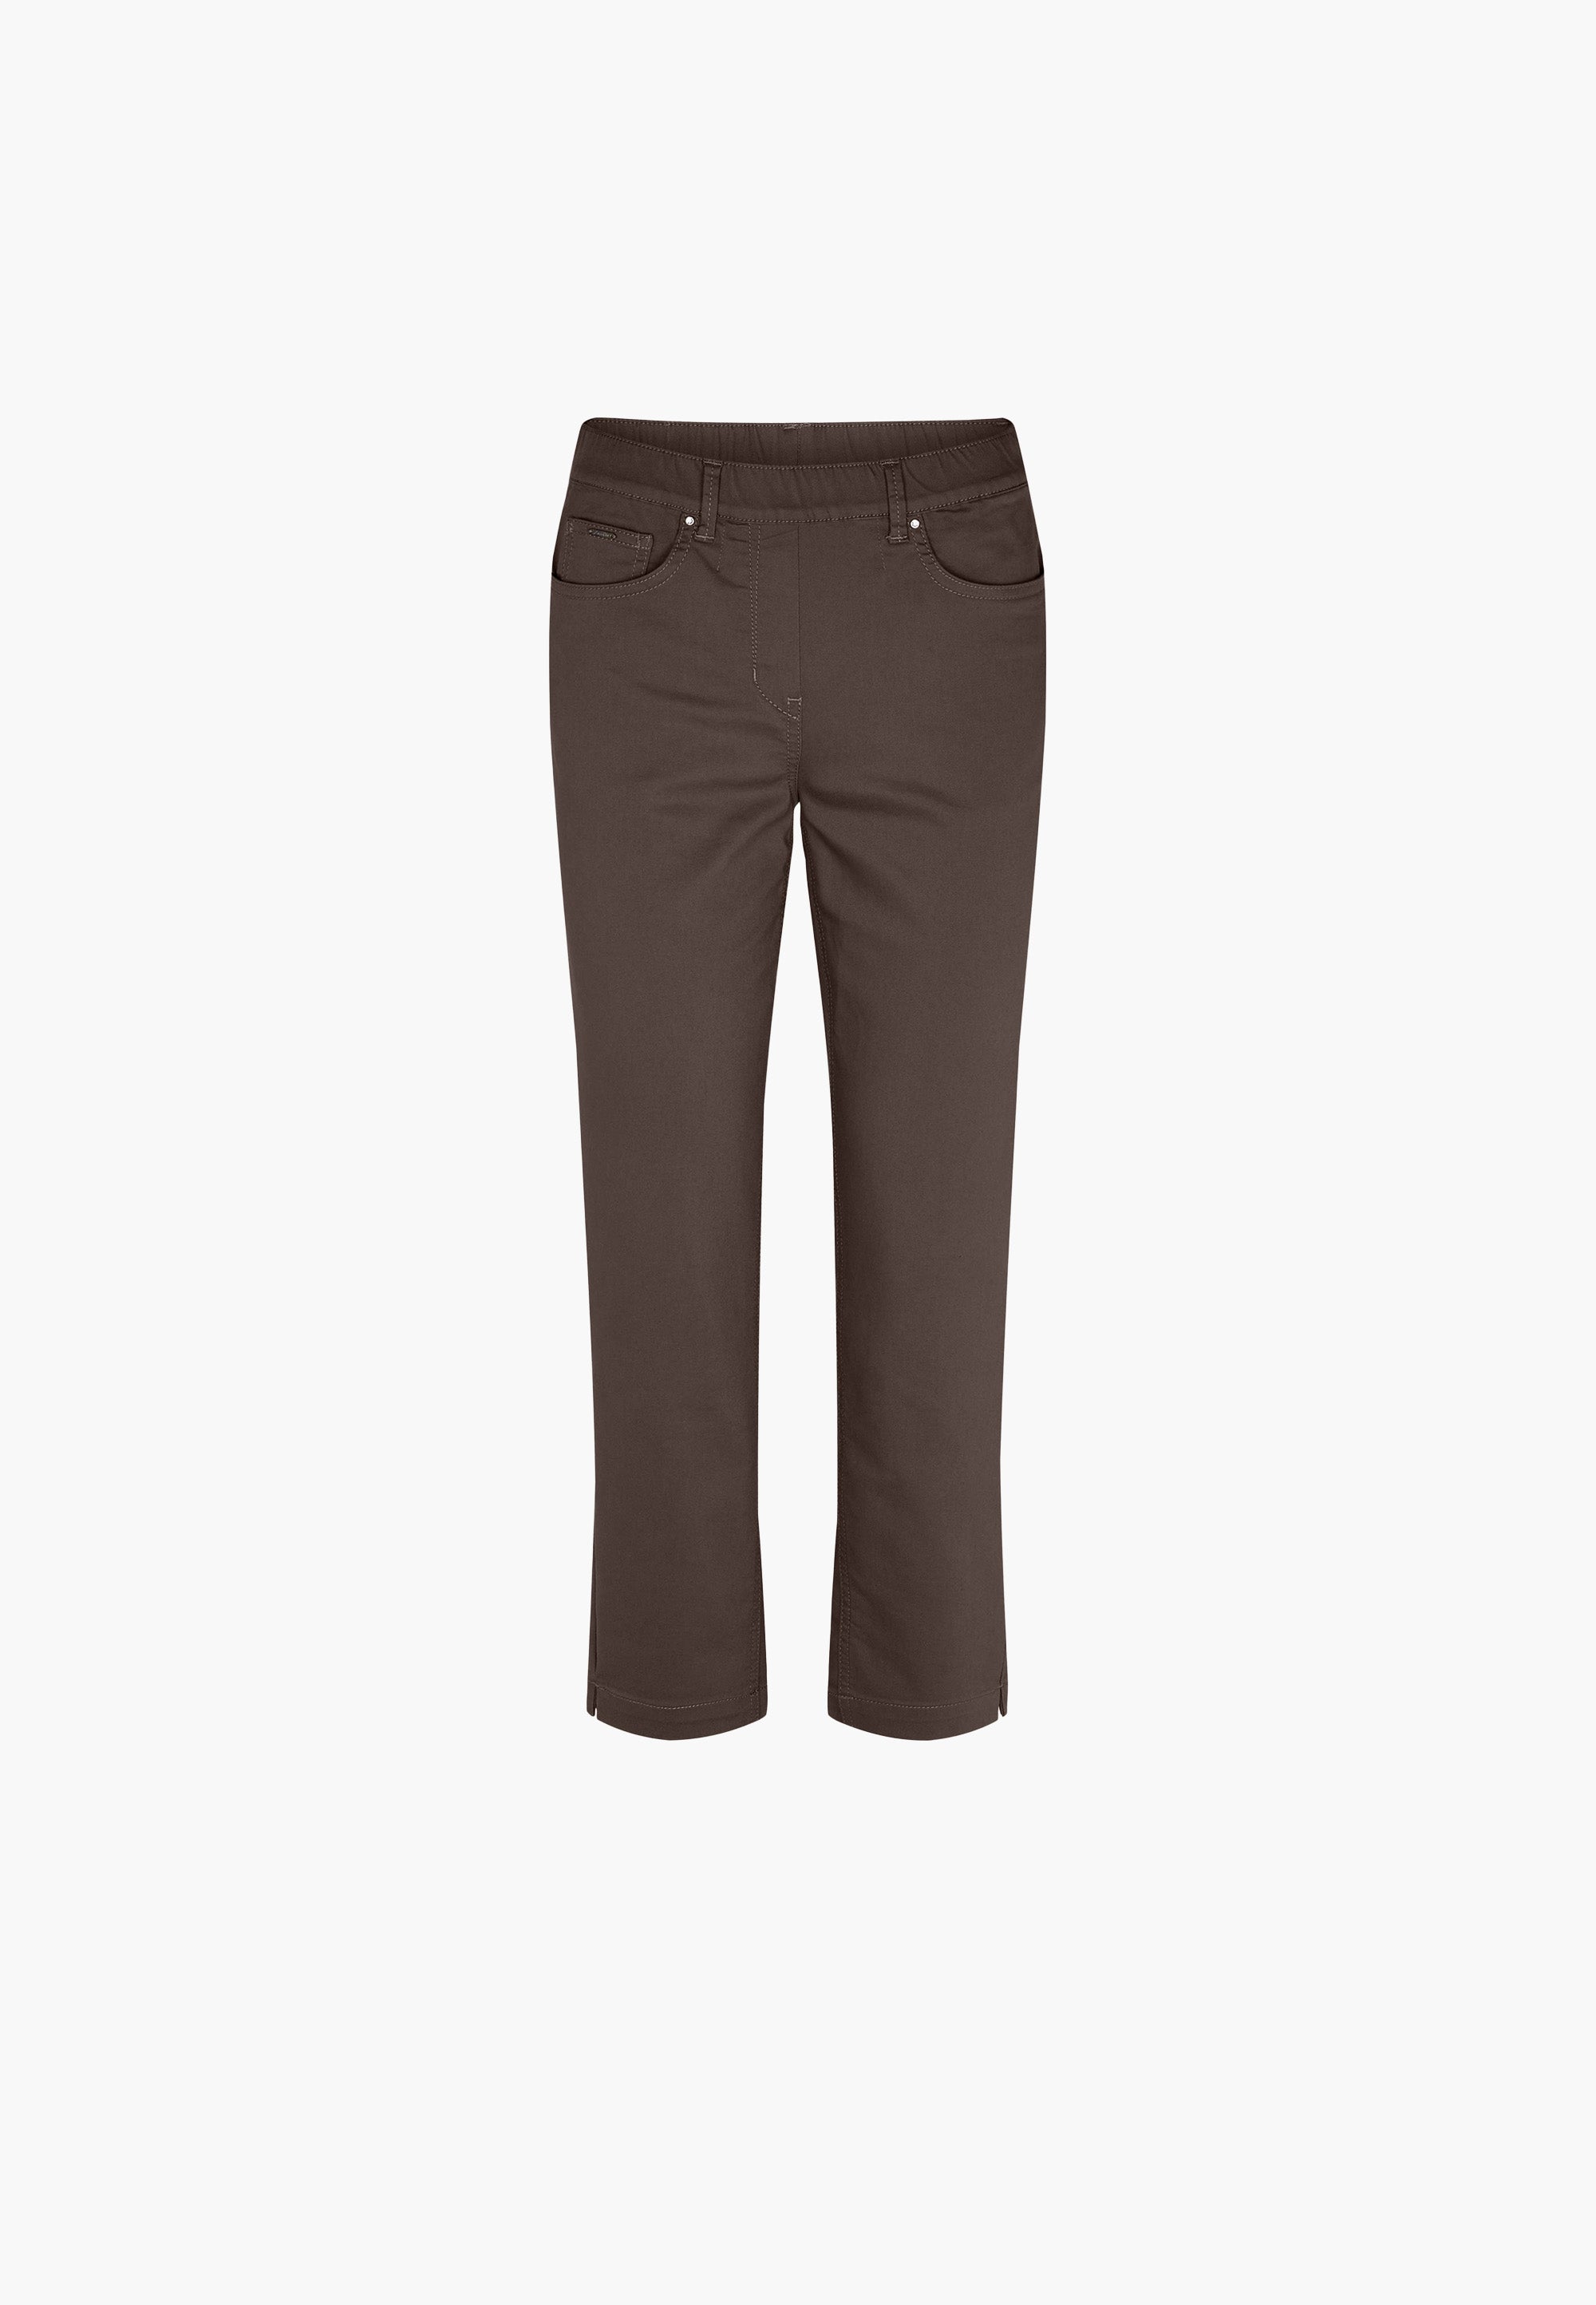 LAURIE  Hannah Regular - Extra Short Length Trousers REGULAR 88000 Brown